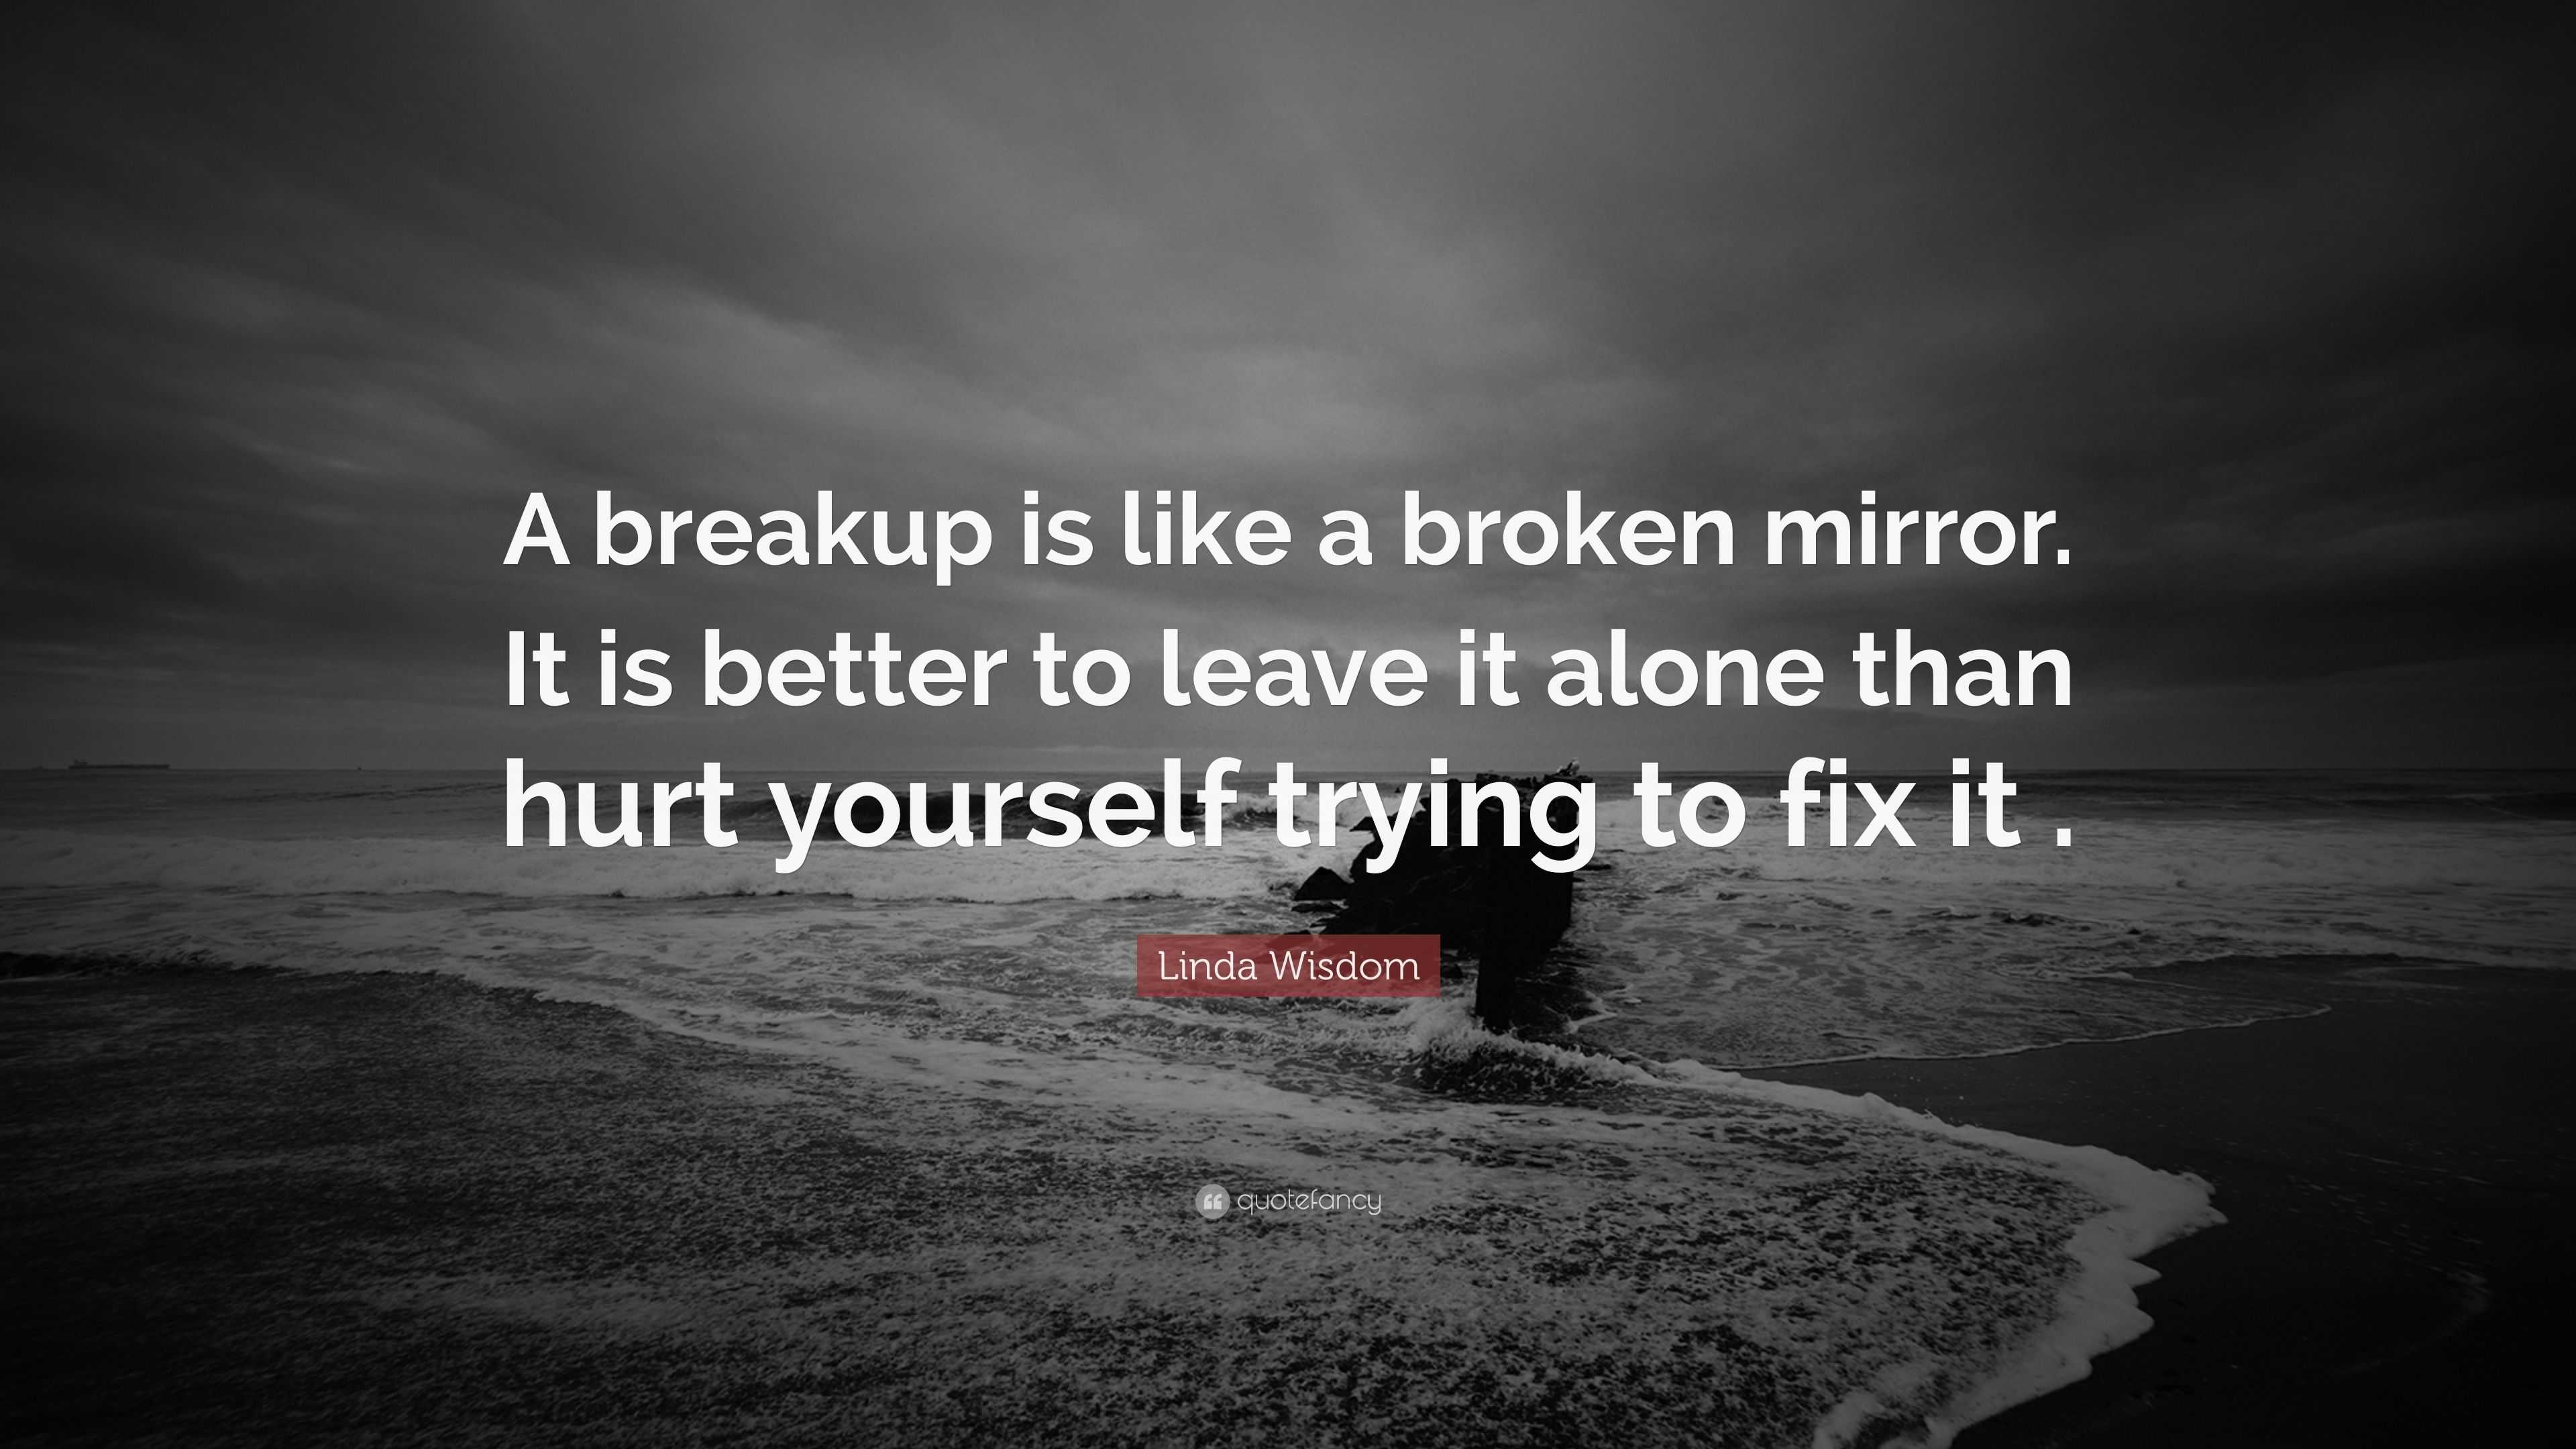 Linda Wisdom Quote: “A breakup is like a broken mirror. It is better to